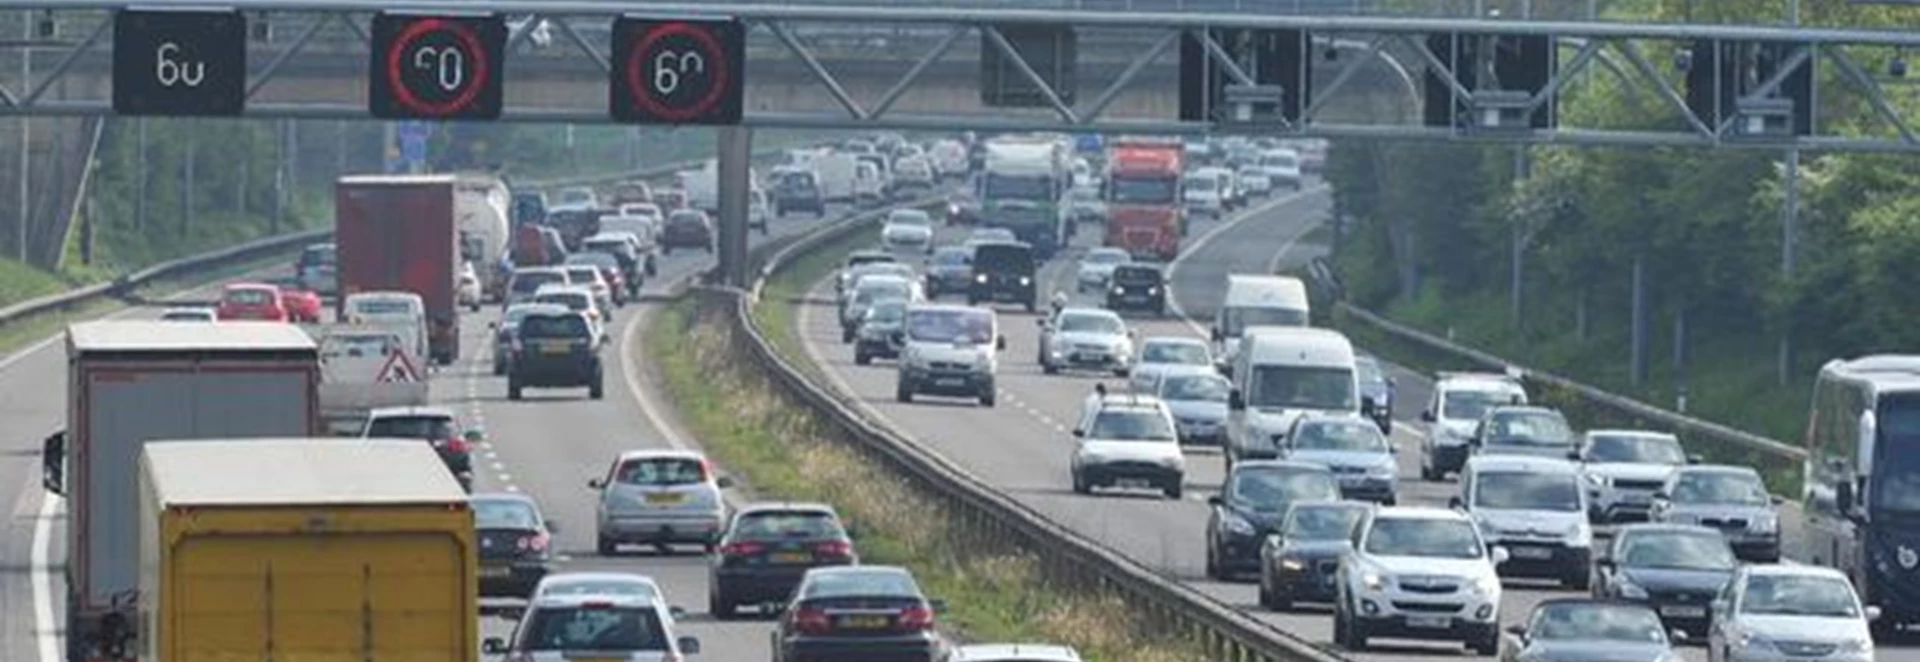 UK motorists unconvinced Brexit will benefit them 